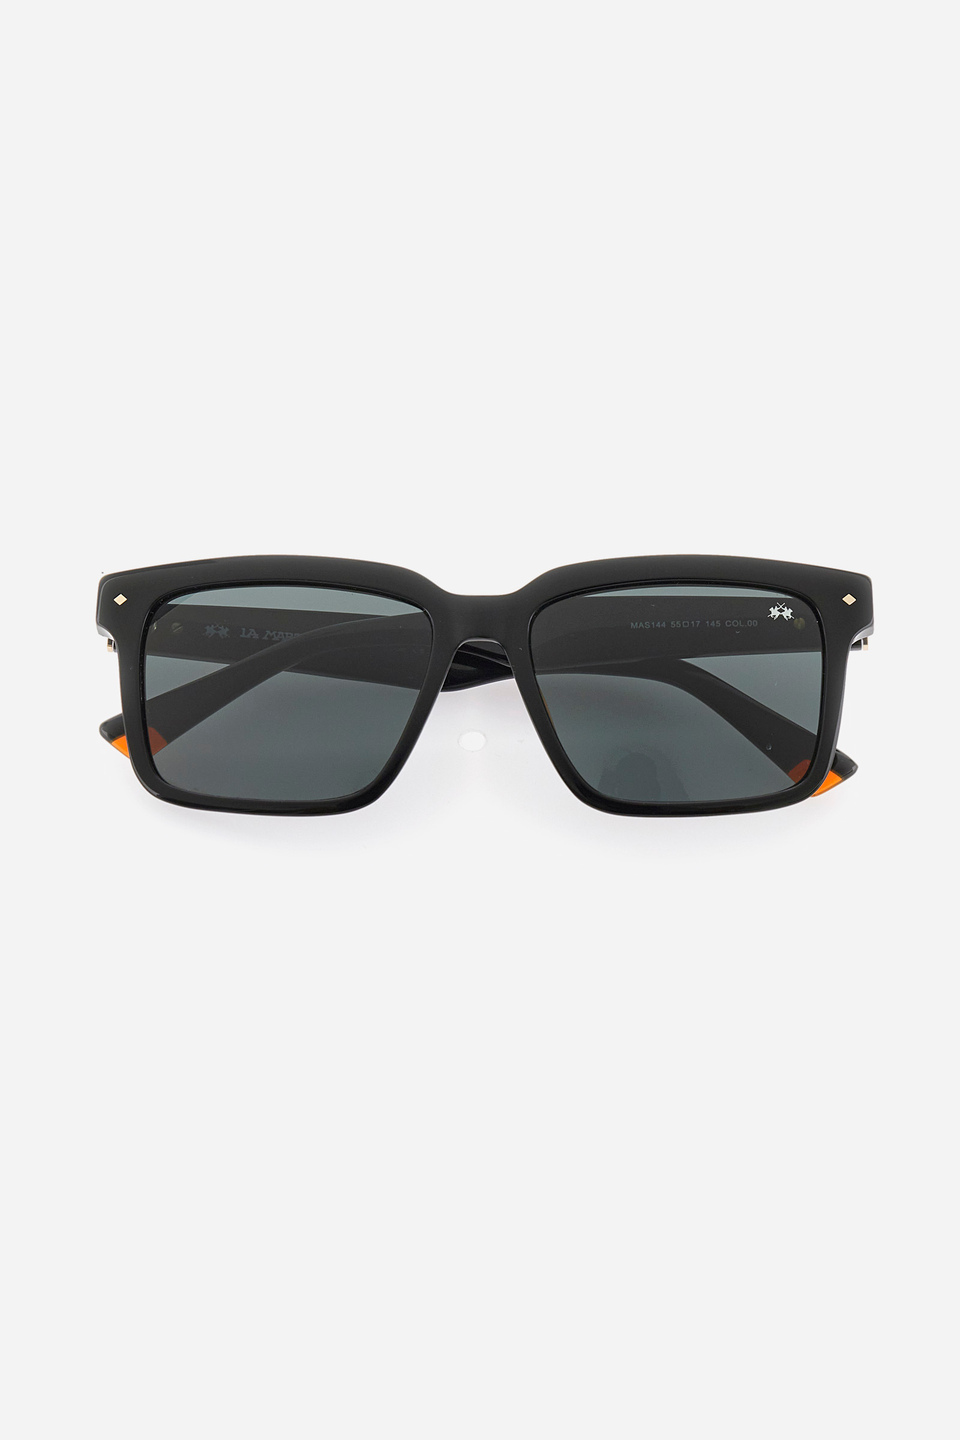 Sonnenbrille quadratisches Modell | La Martina - Official Online Shop